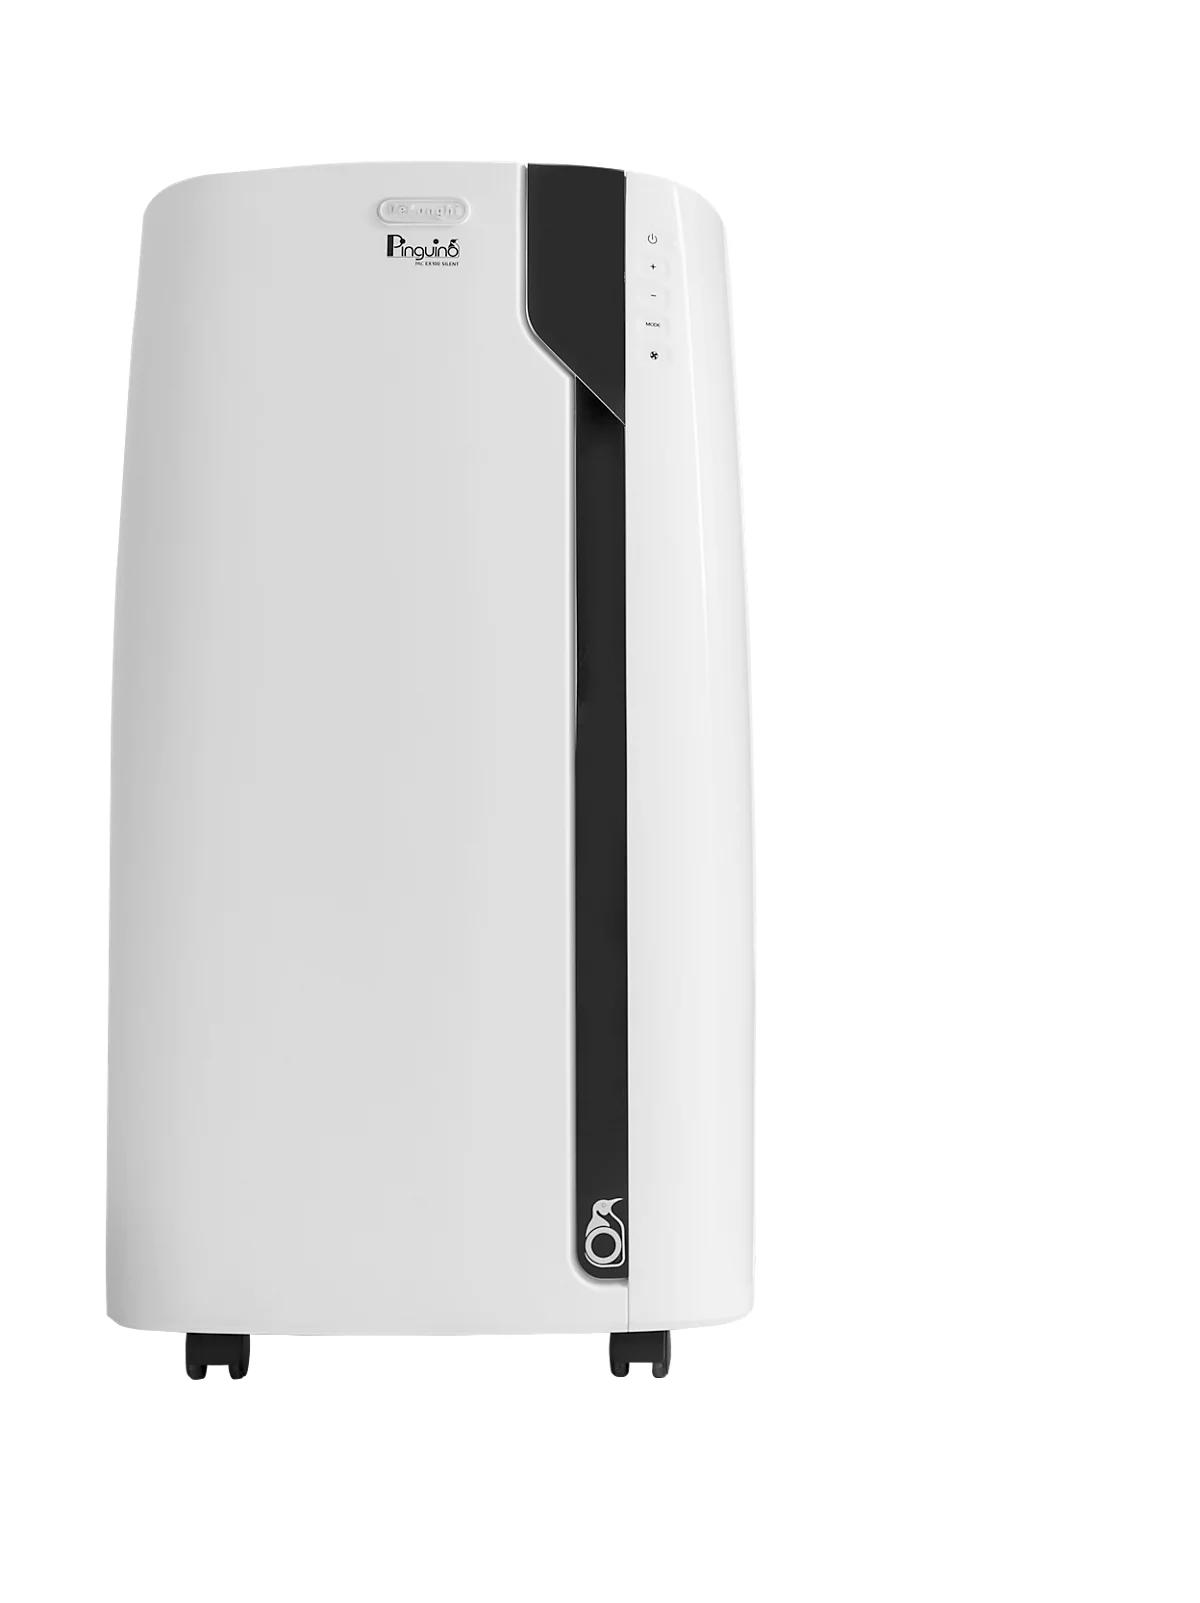 Mobiele airconditioner DéLonghi Comfort PAC EX100 Silent, lucht-lucht-systeem, tot 2,5 kW koelvermogen, max. 350 mm m³/h